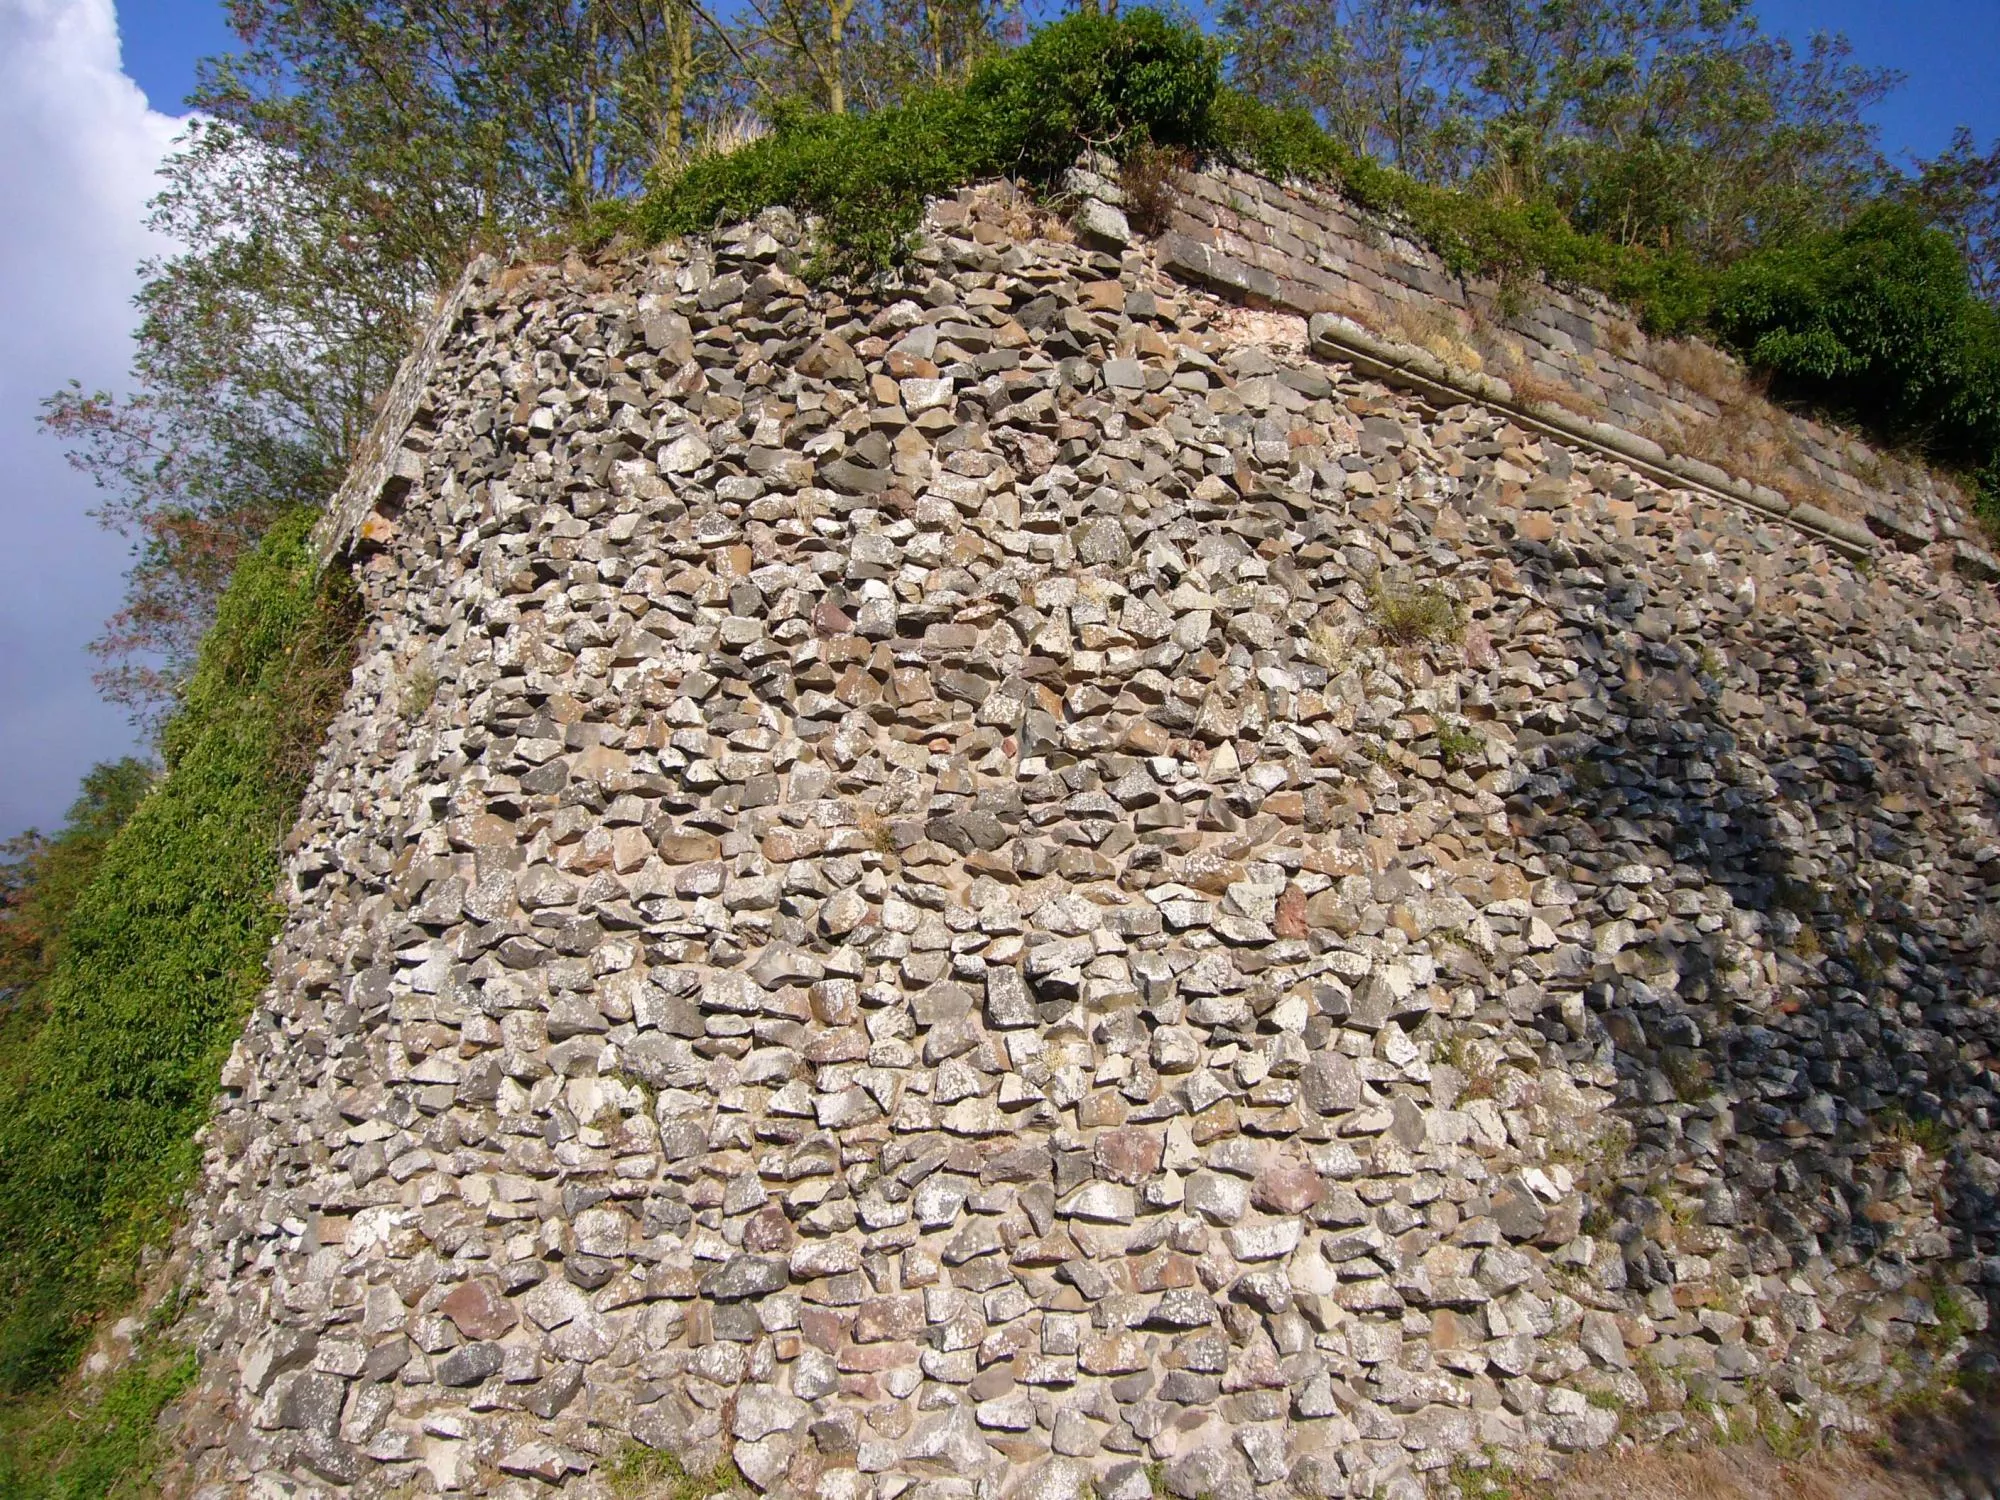 Rocca of Radicofani